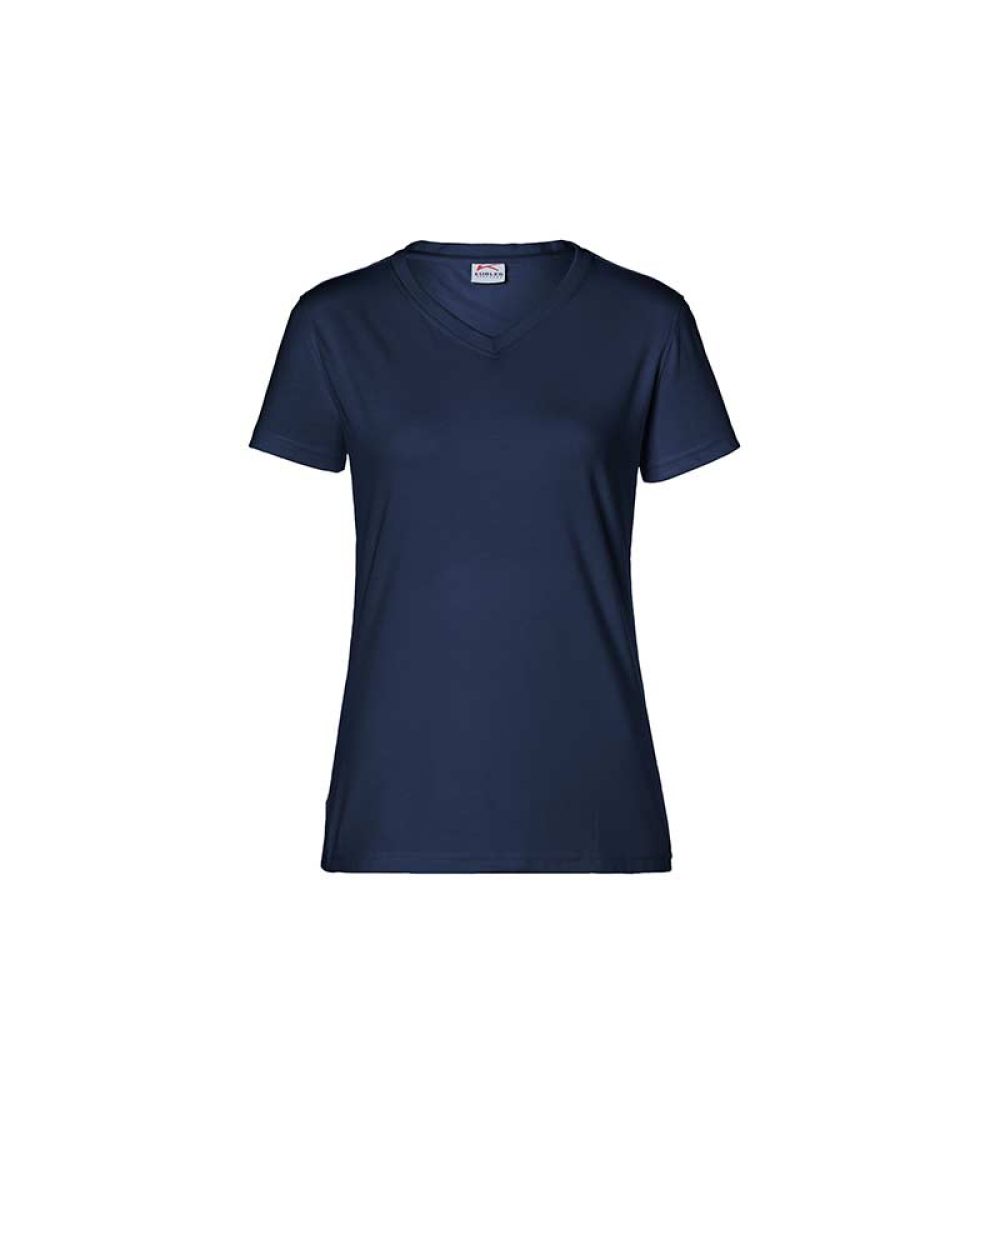 kuebler-damen-t-shirt-shirts-5024-6238-48